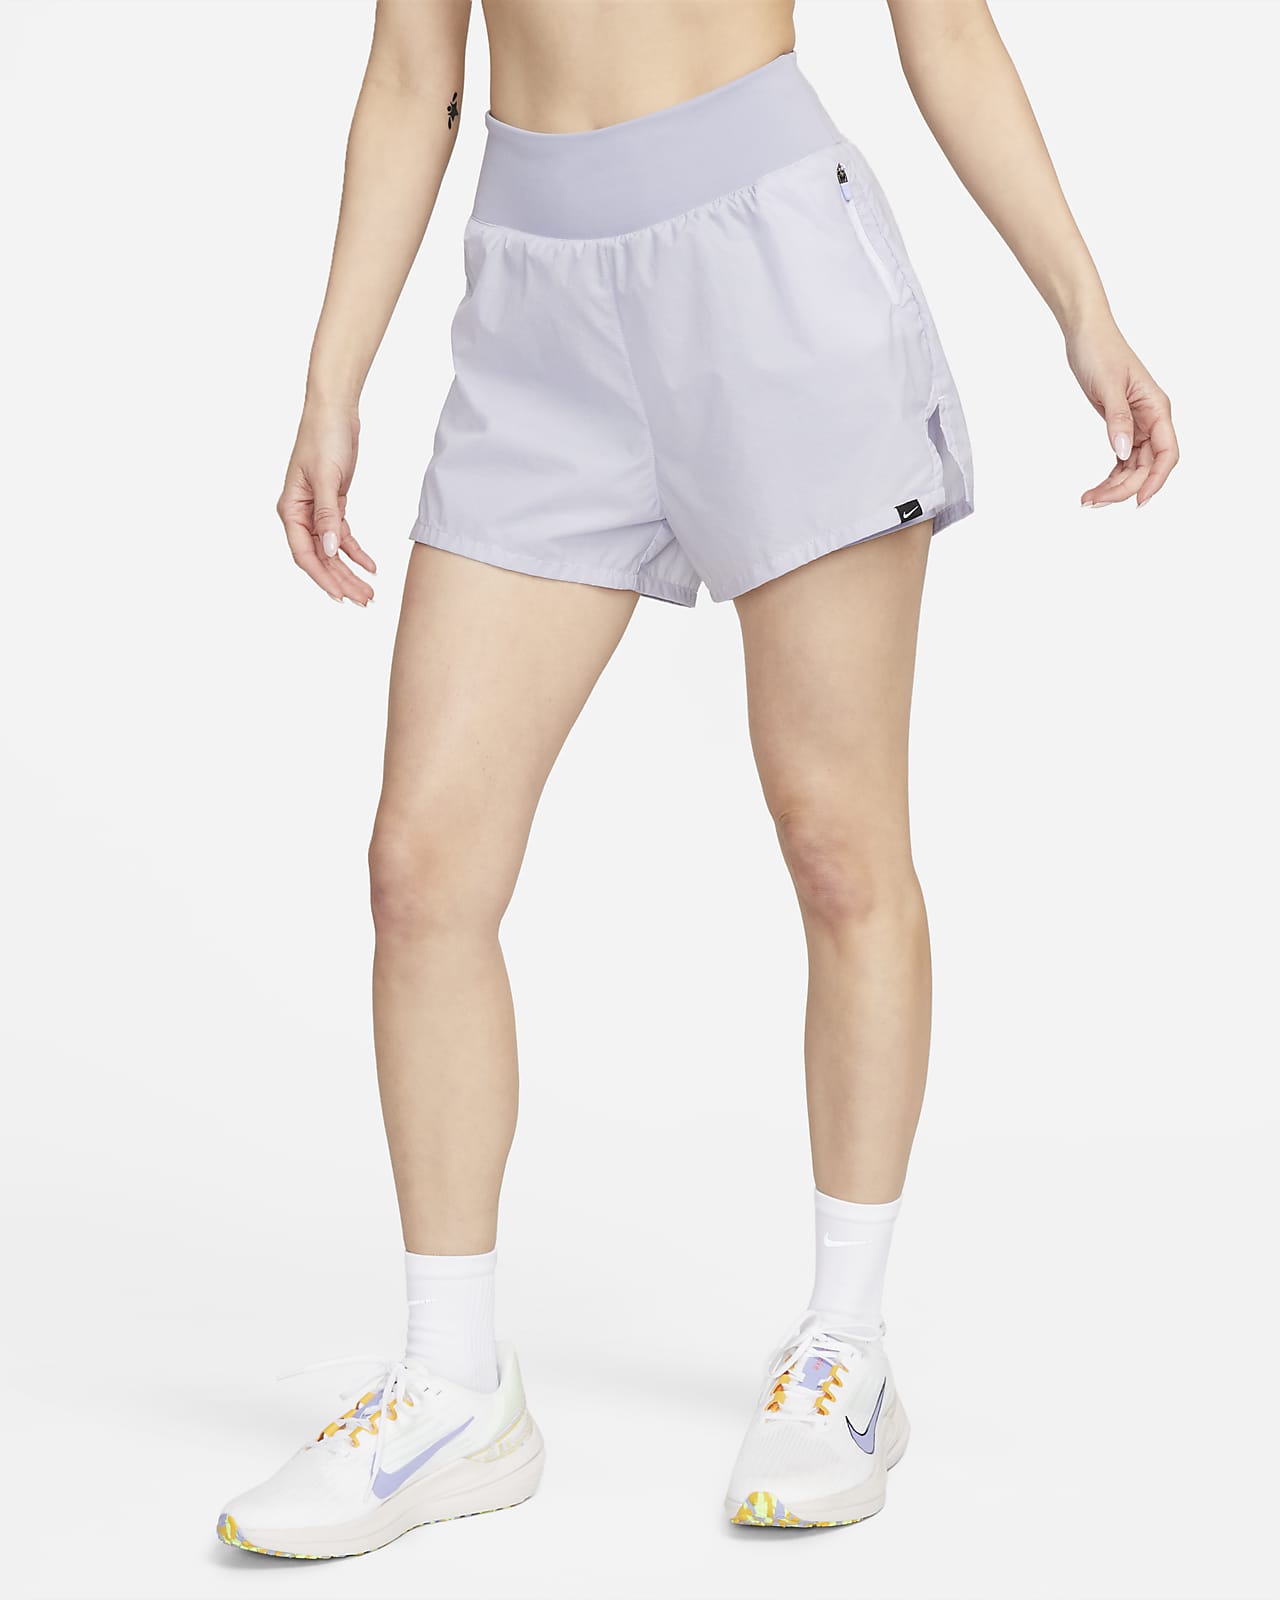 Sportswear gym vintage shorts in flecked cotton mix, pink, Nike